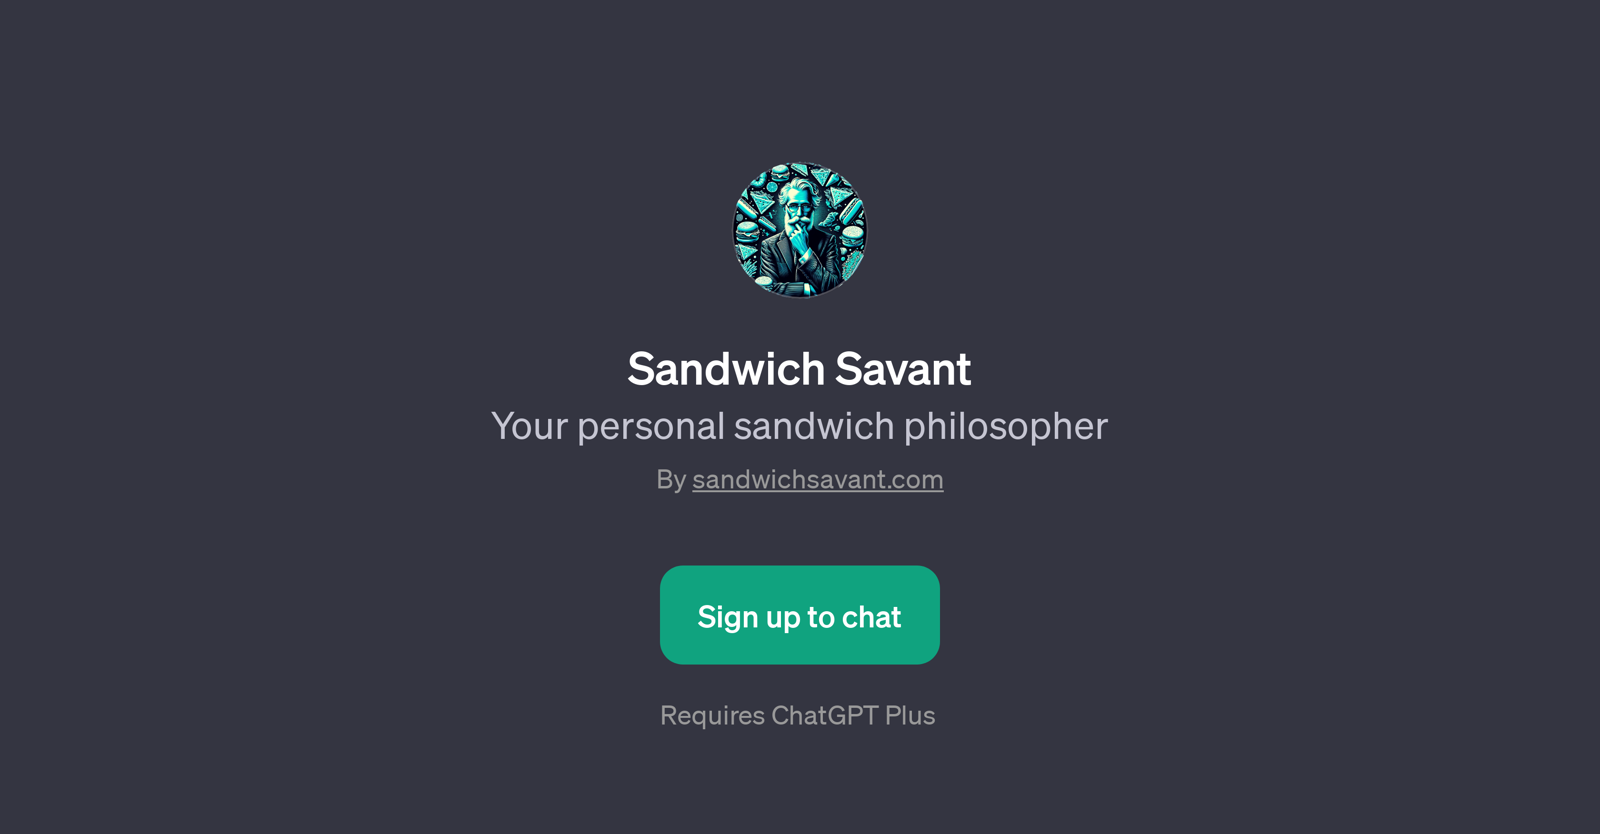 Sandwich Savant website